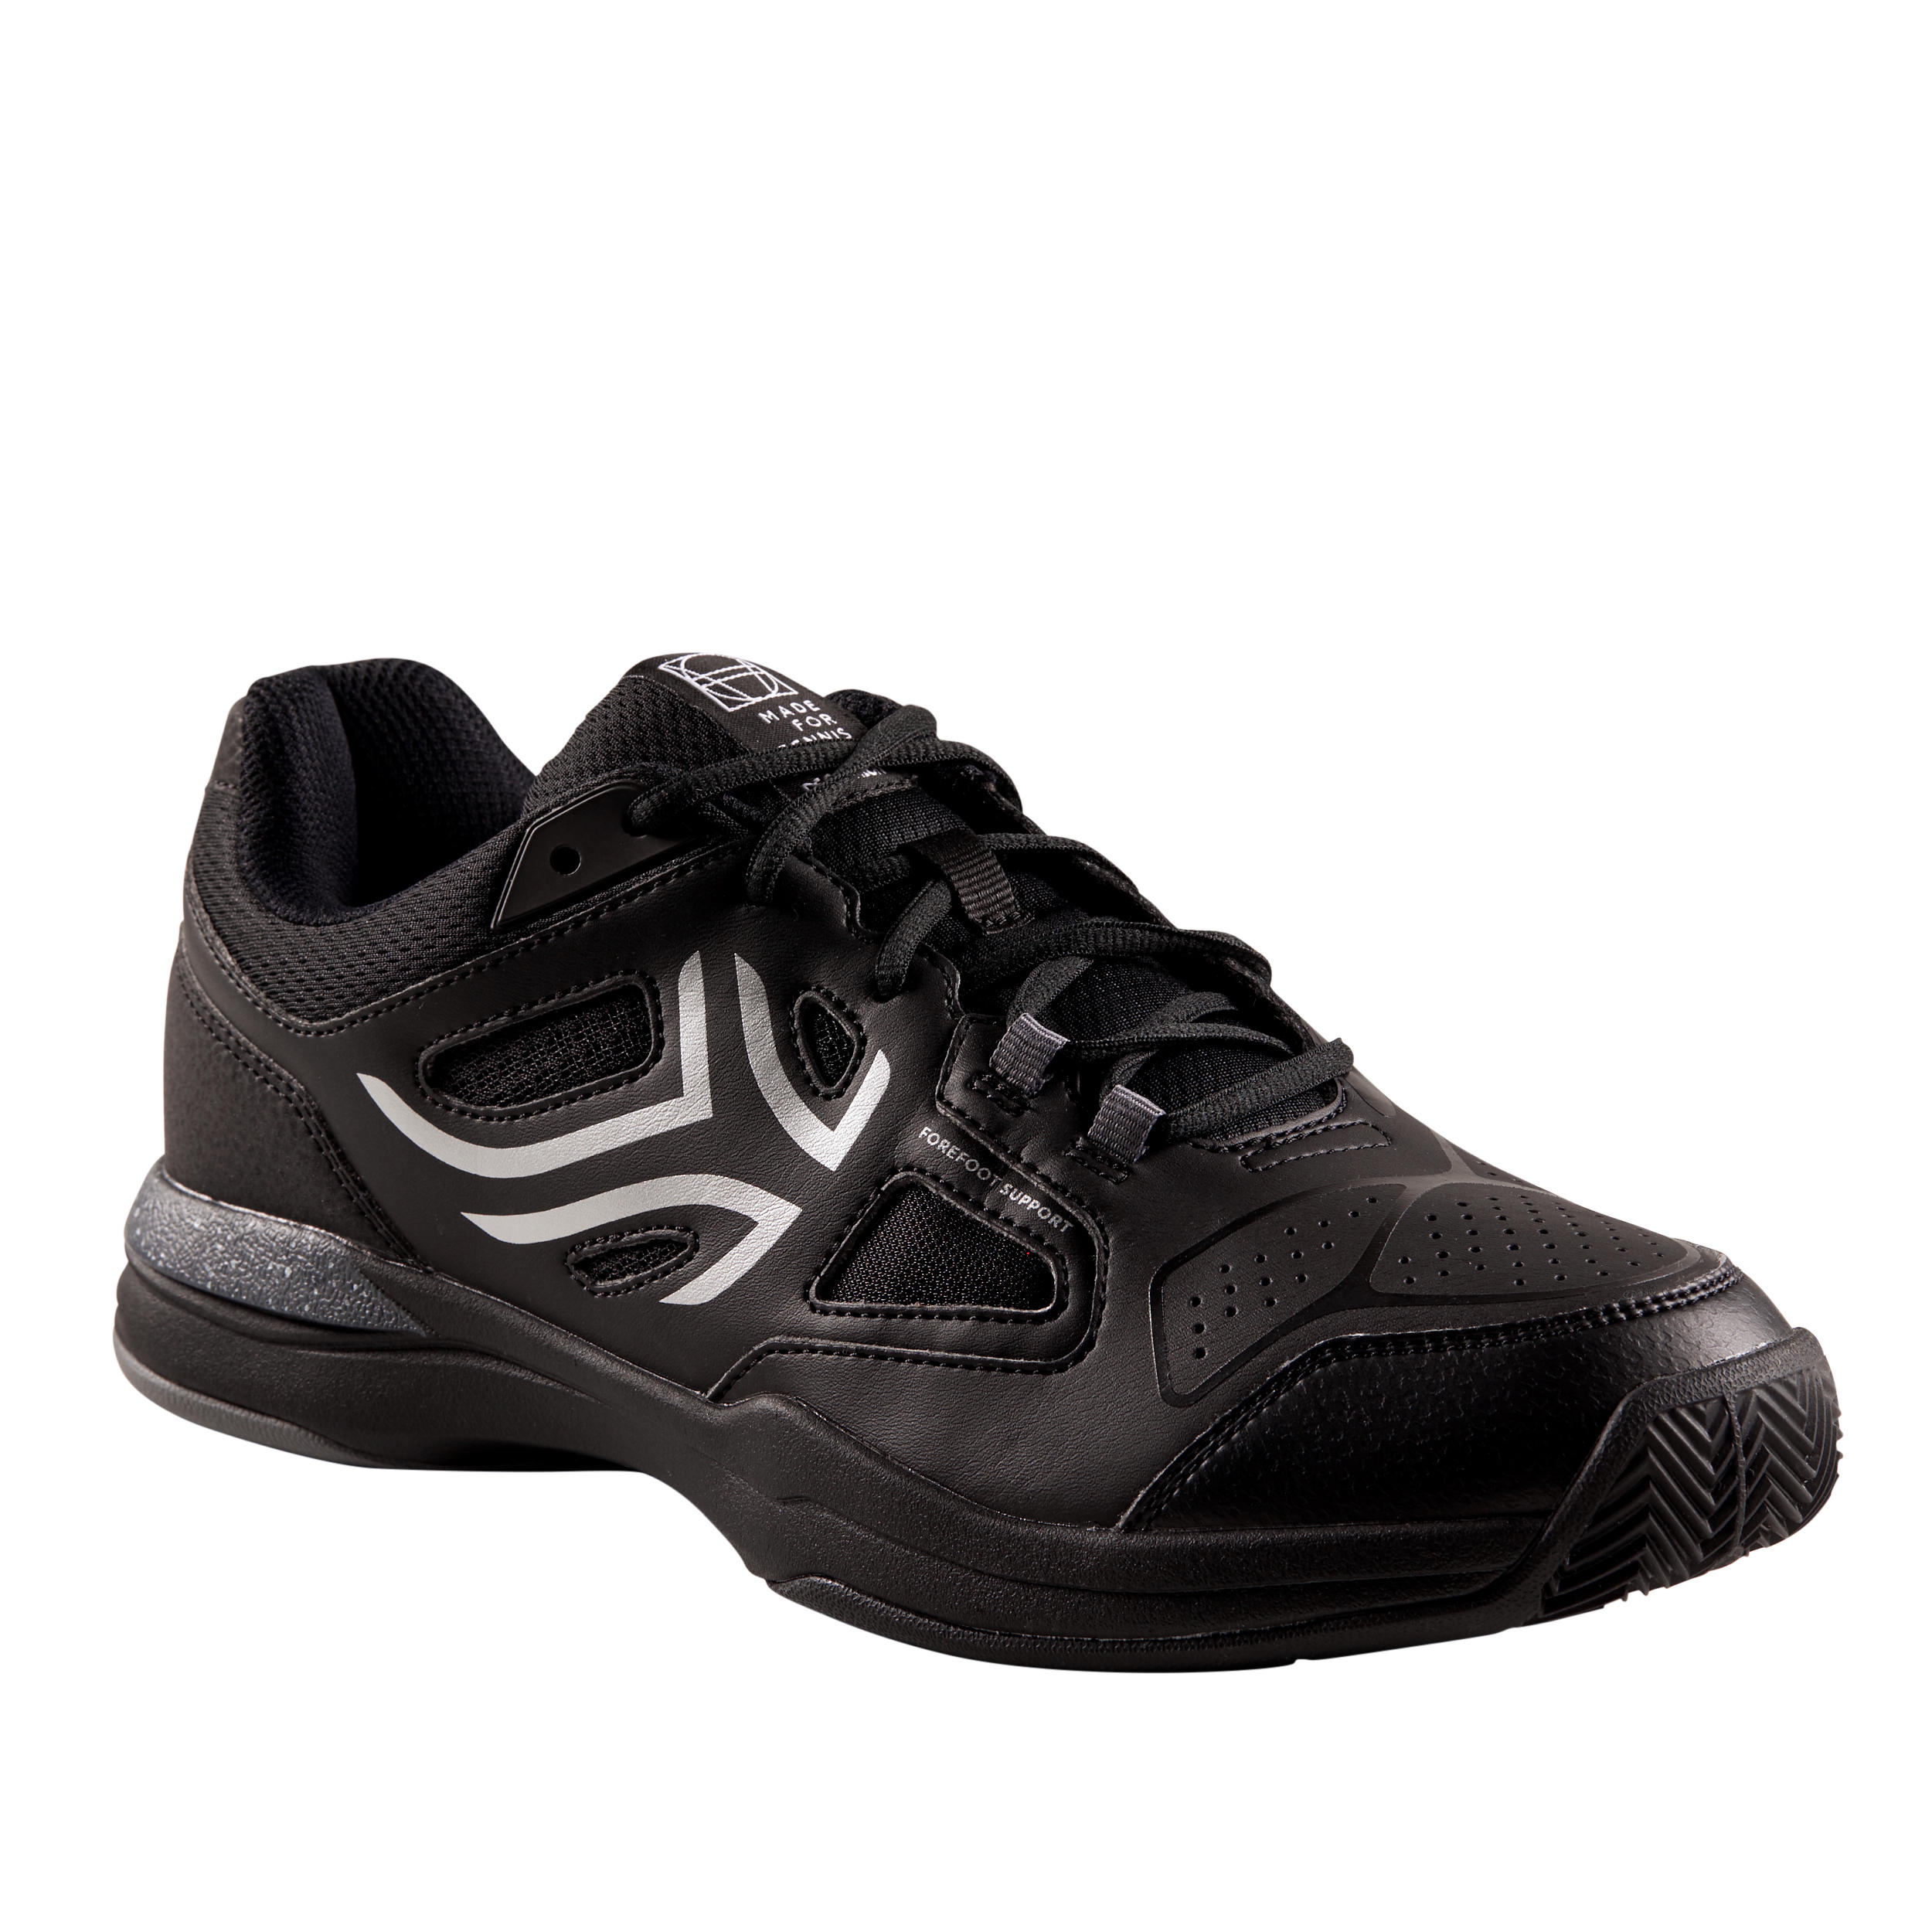 ARTENGO Men's Clay Court Tennis Shoes TS 500 - Black/Grey